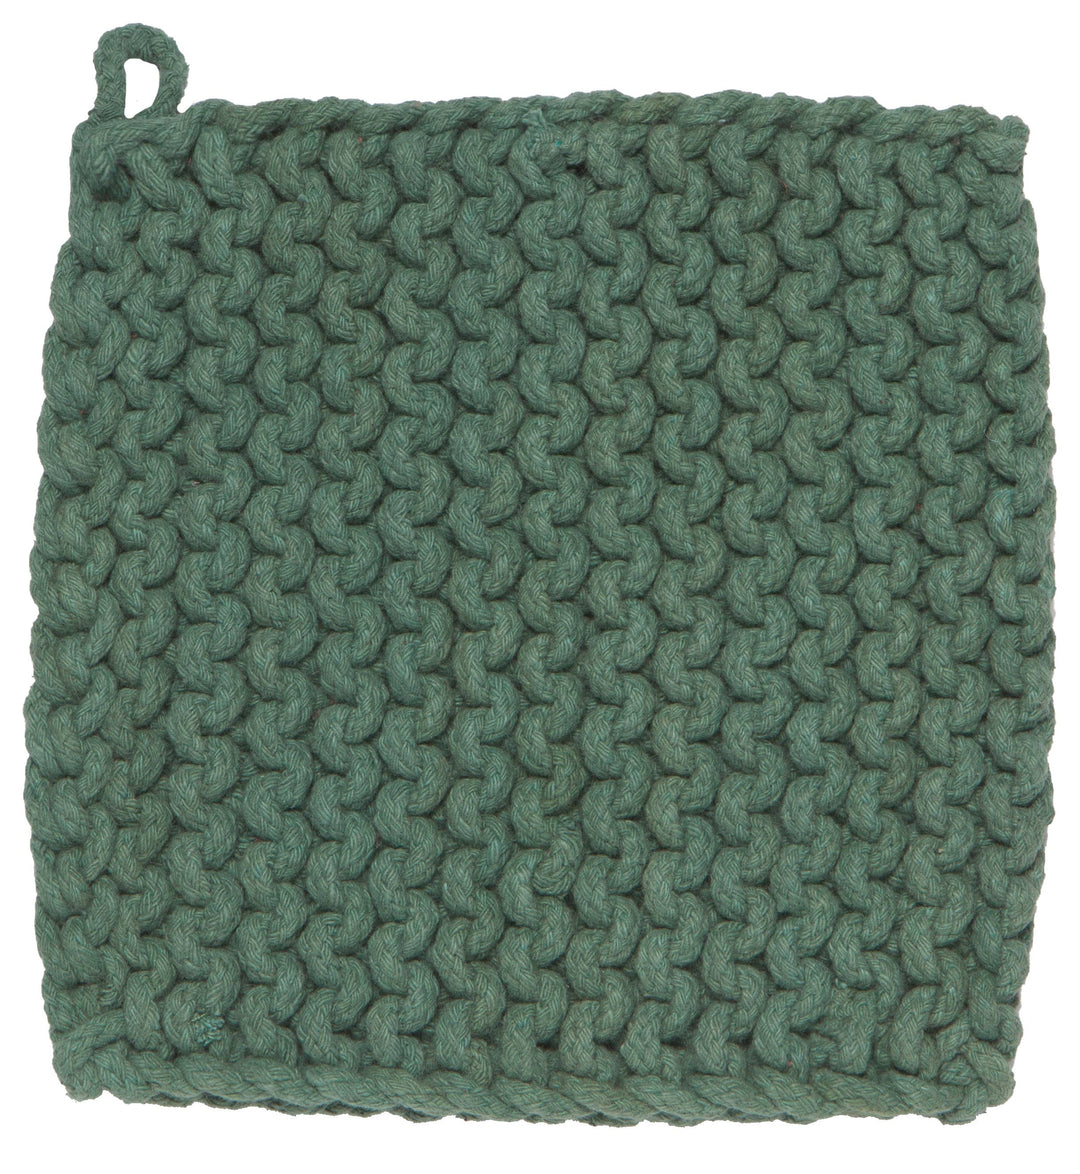 Jade Green Knit Potholder - Merry Piglets